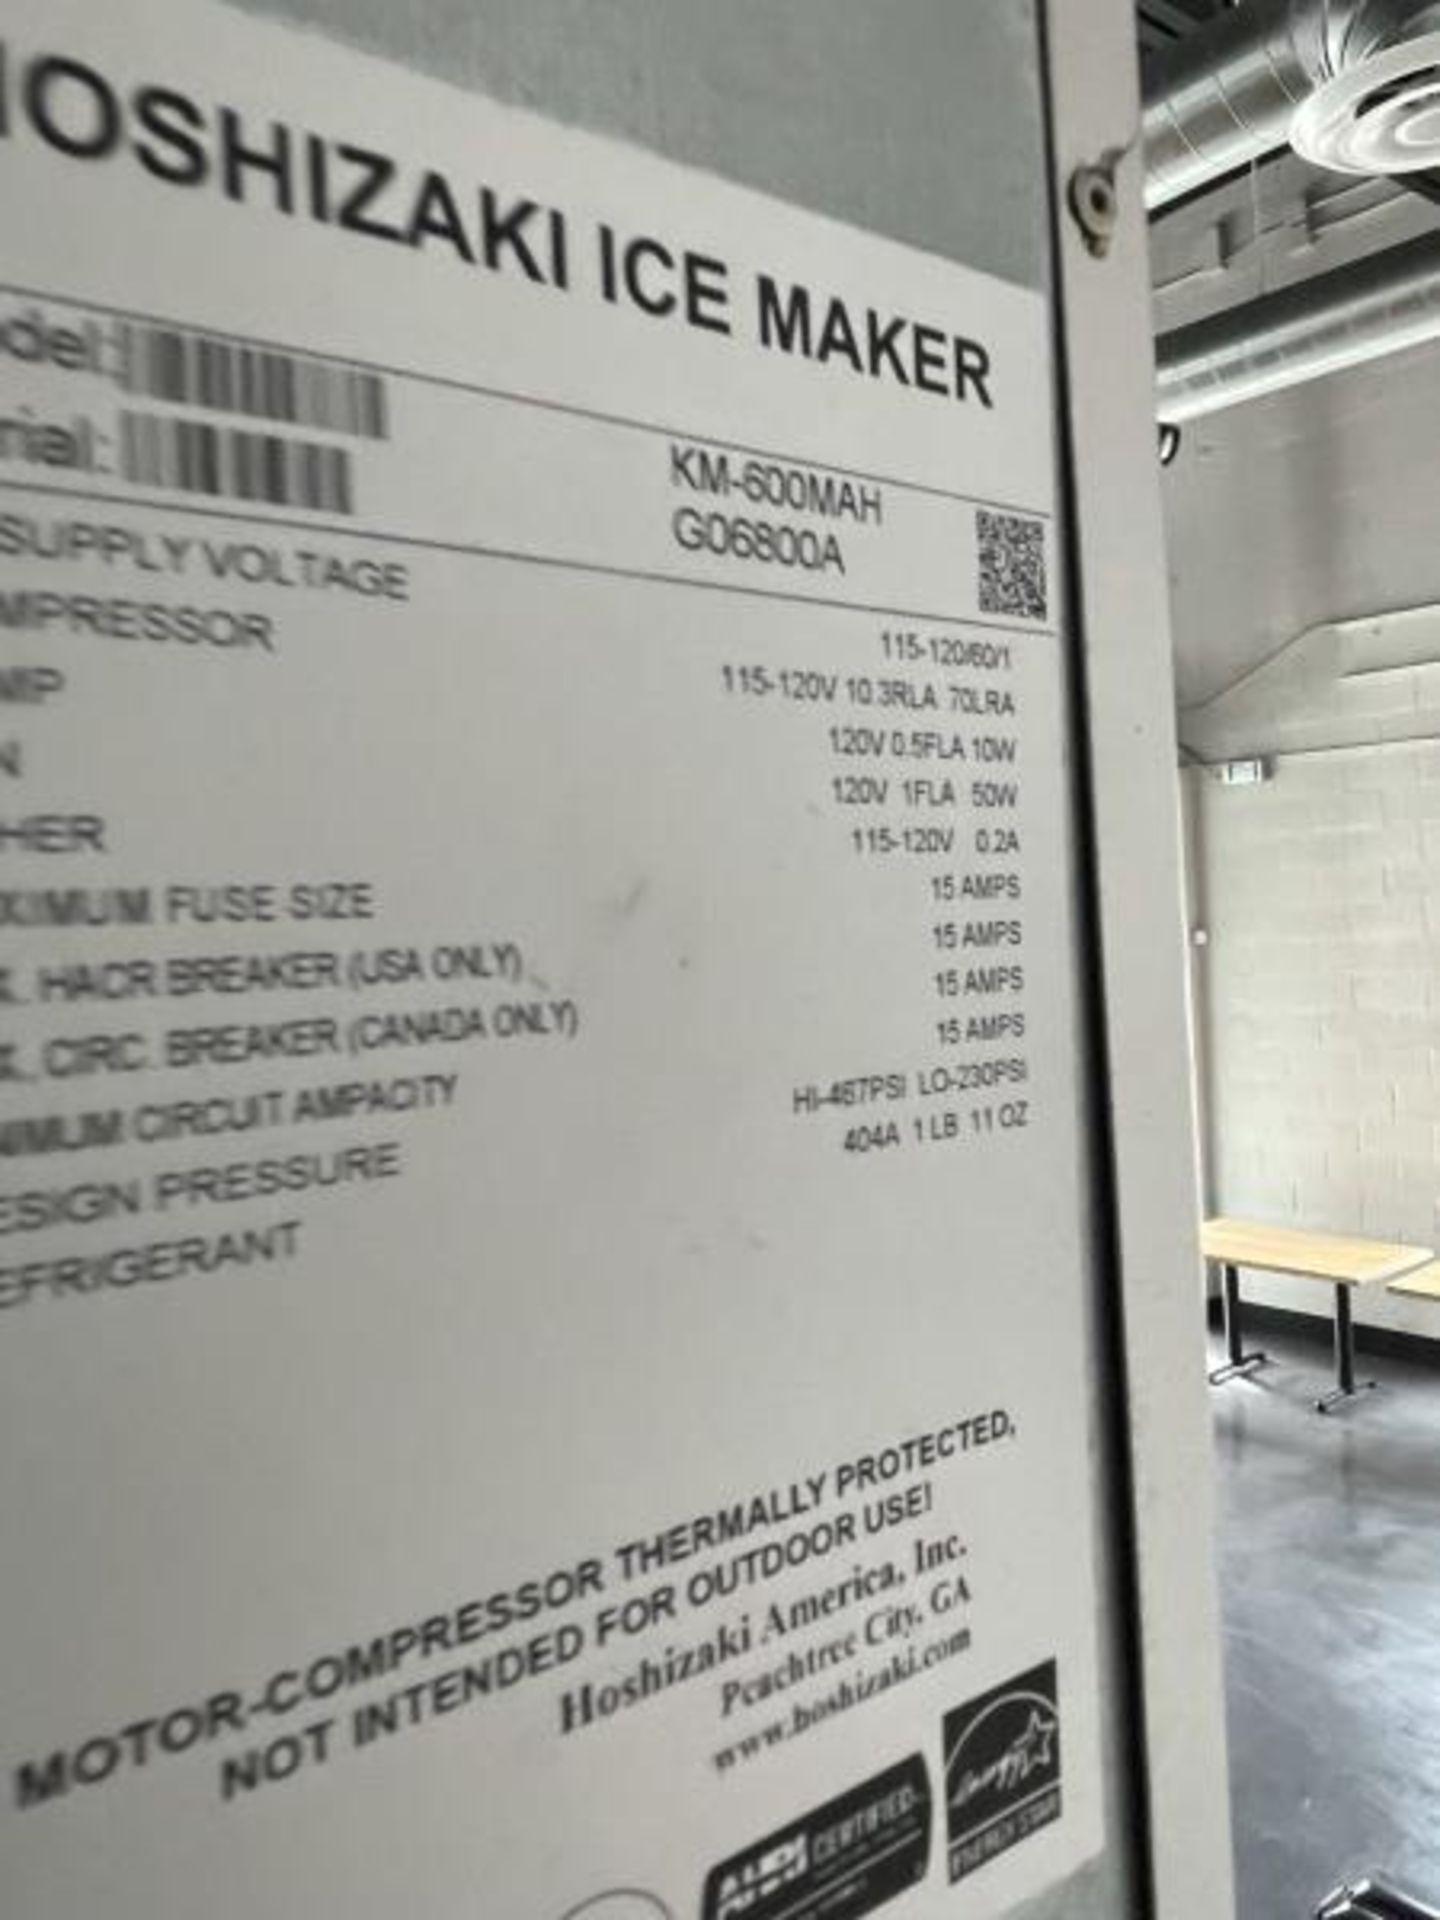 Hoshizaki ice machine, no storage, M: KM-600MAH, must be removed from the Coke machine base - Image 4 of 5